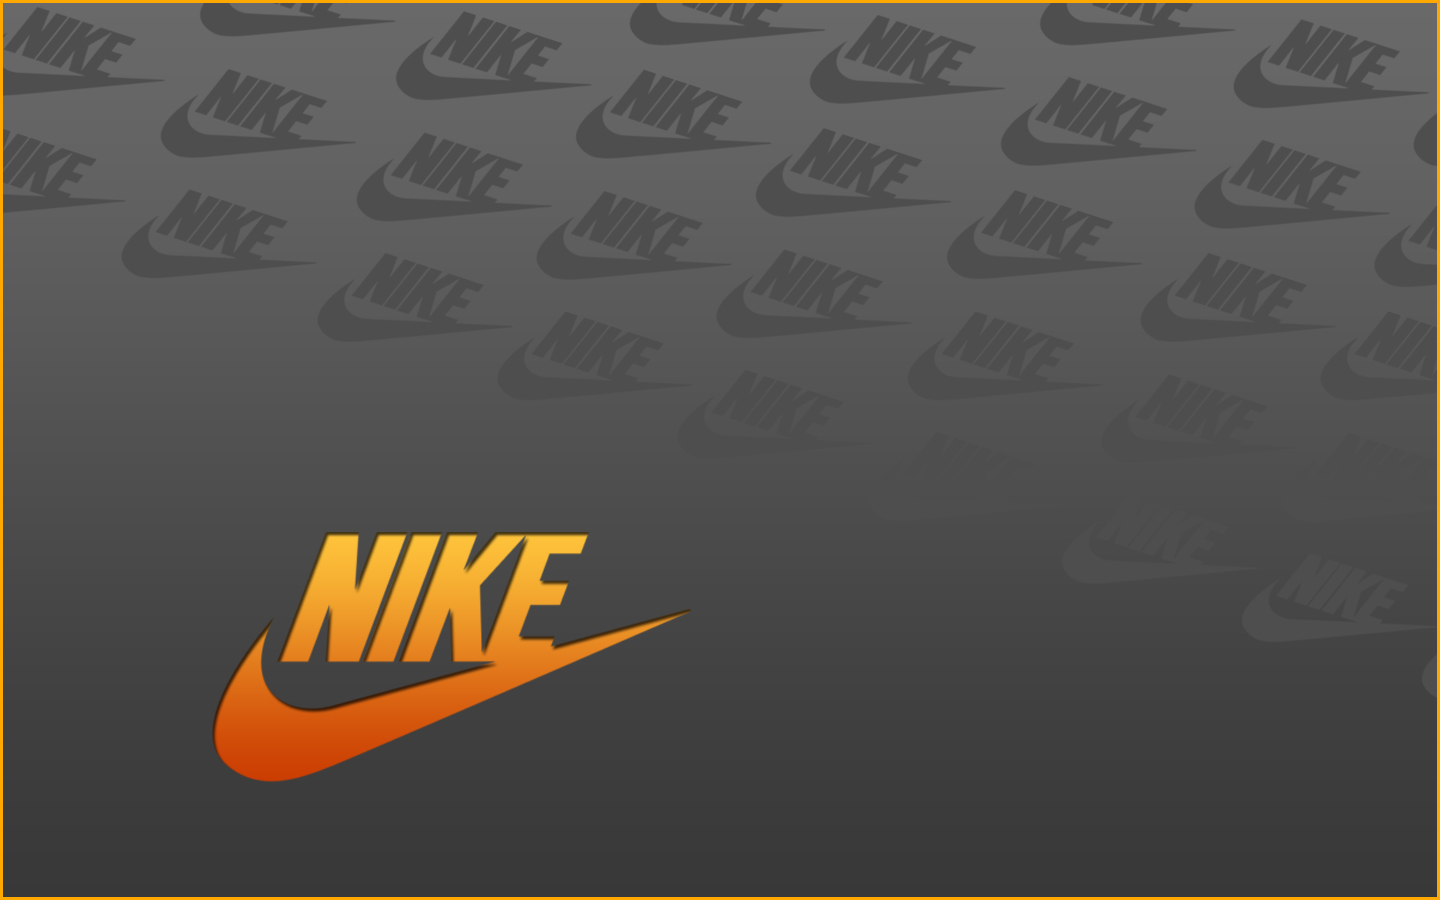 Nike Nike Nike Nike Wallpaper Download 1440x900